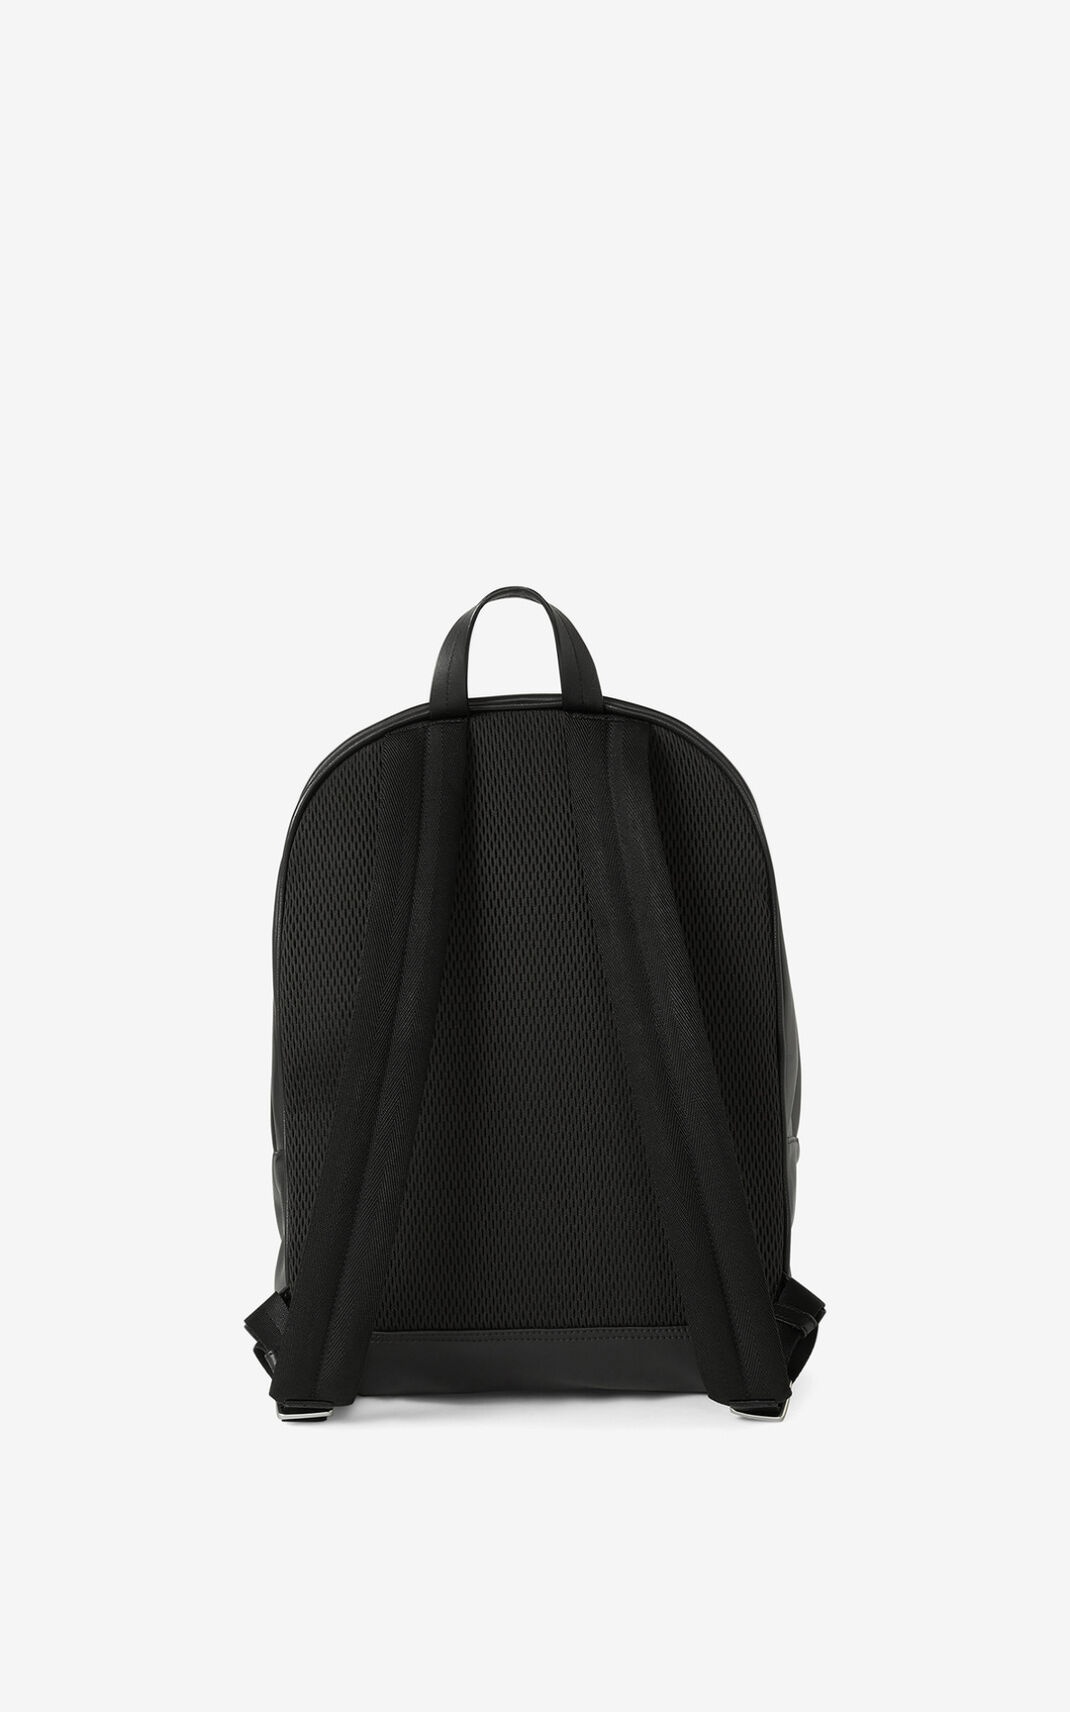 Tiger leather backpack - 2